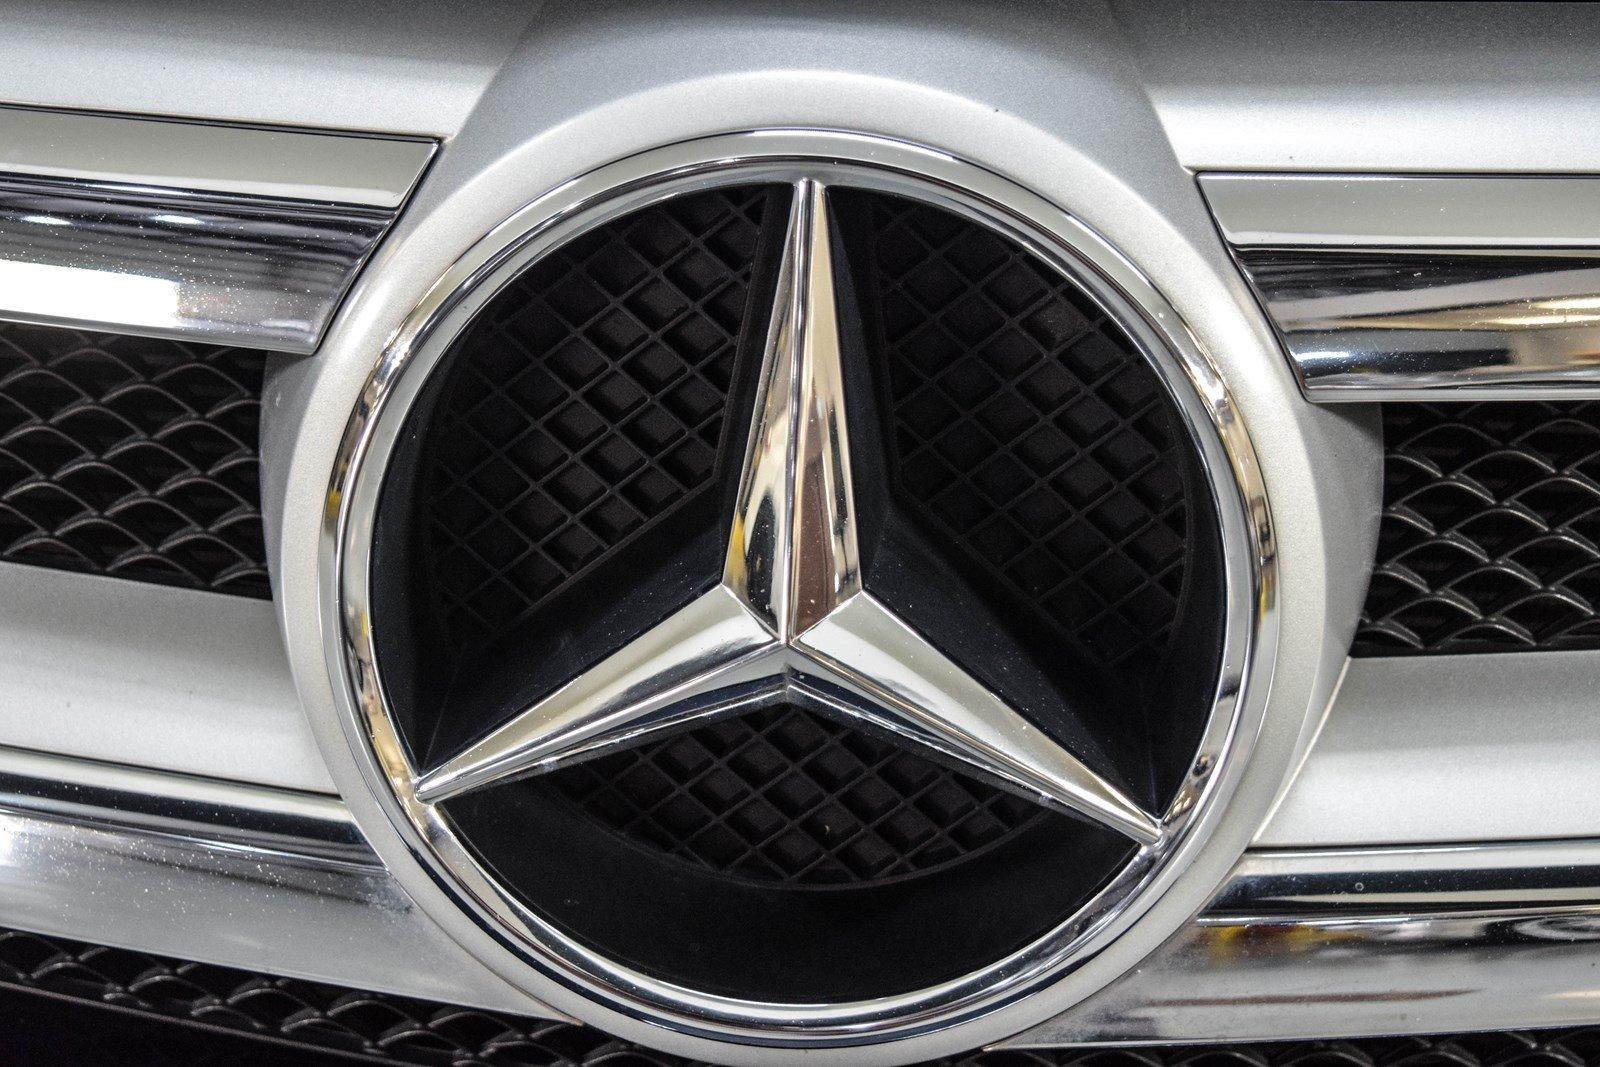 Used 2013 Mercedes-Benz GL-Class GL550 for sale Sold at Gravity Autos Marietta in Marietta GA 30060 10